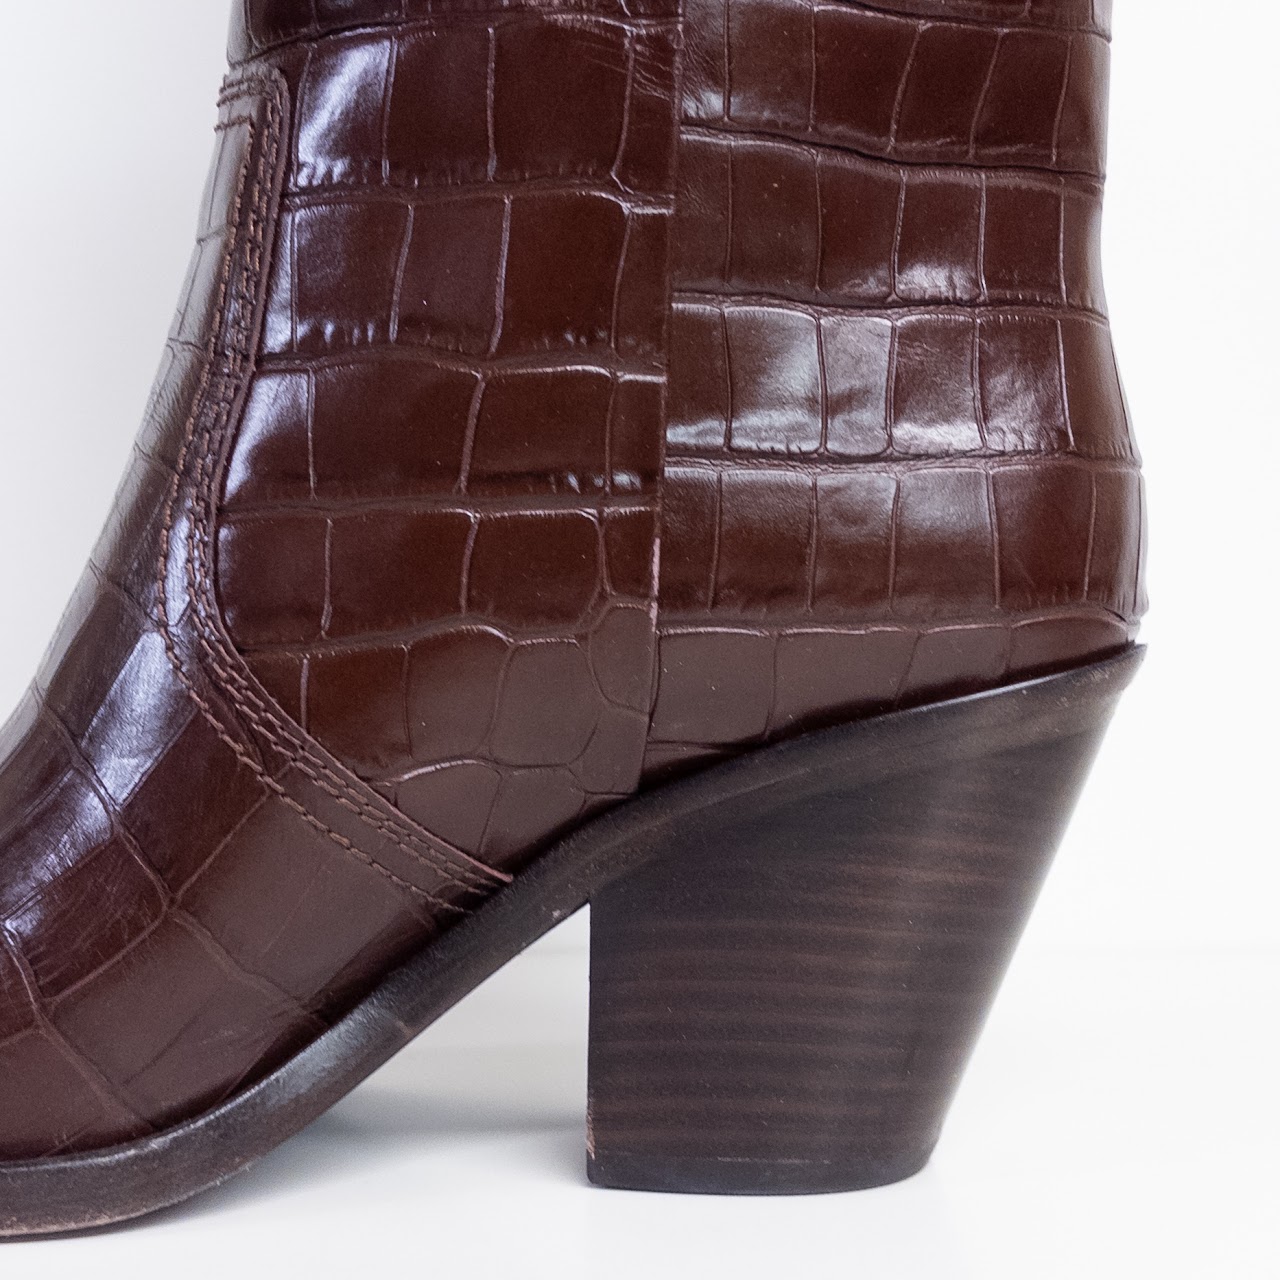 Loeffler Randall Leather Tall Boots